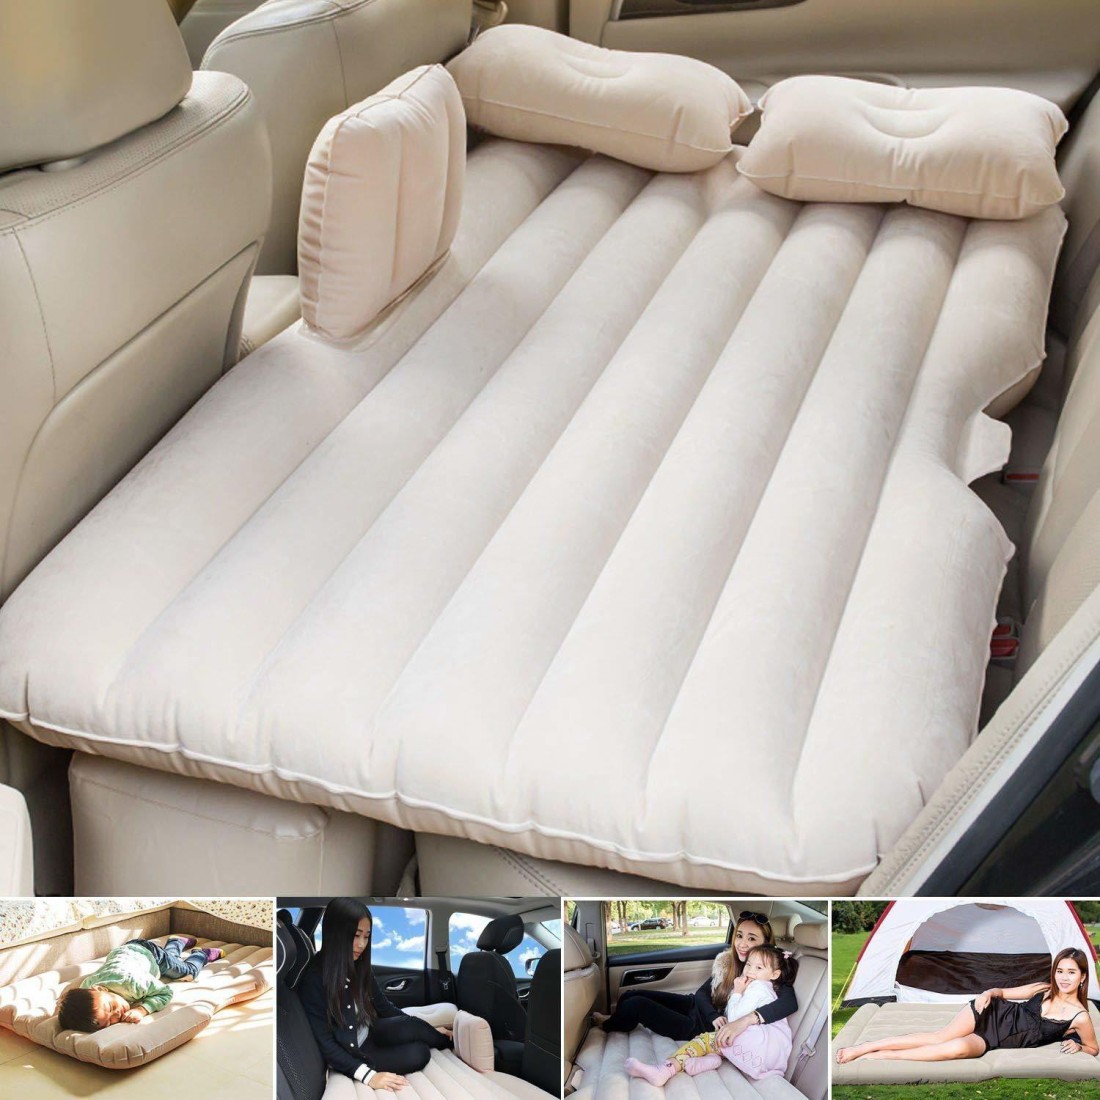 ZURU BUNCH Travel Inflatable Beige Car Air Mattress Bed with Back